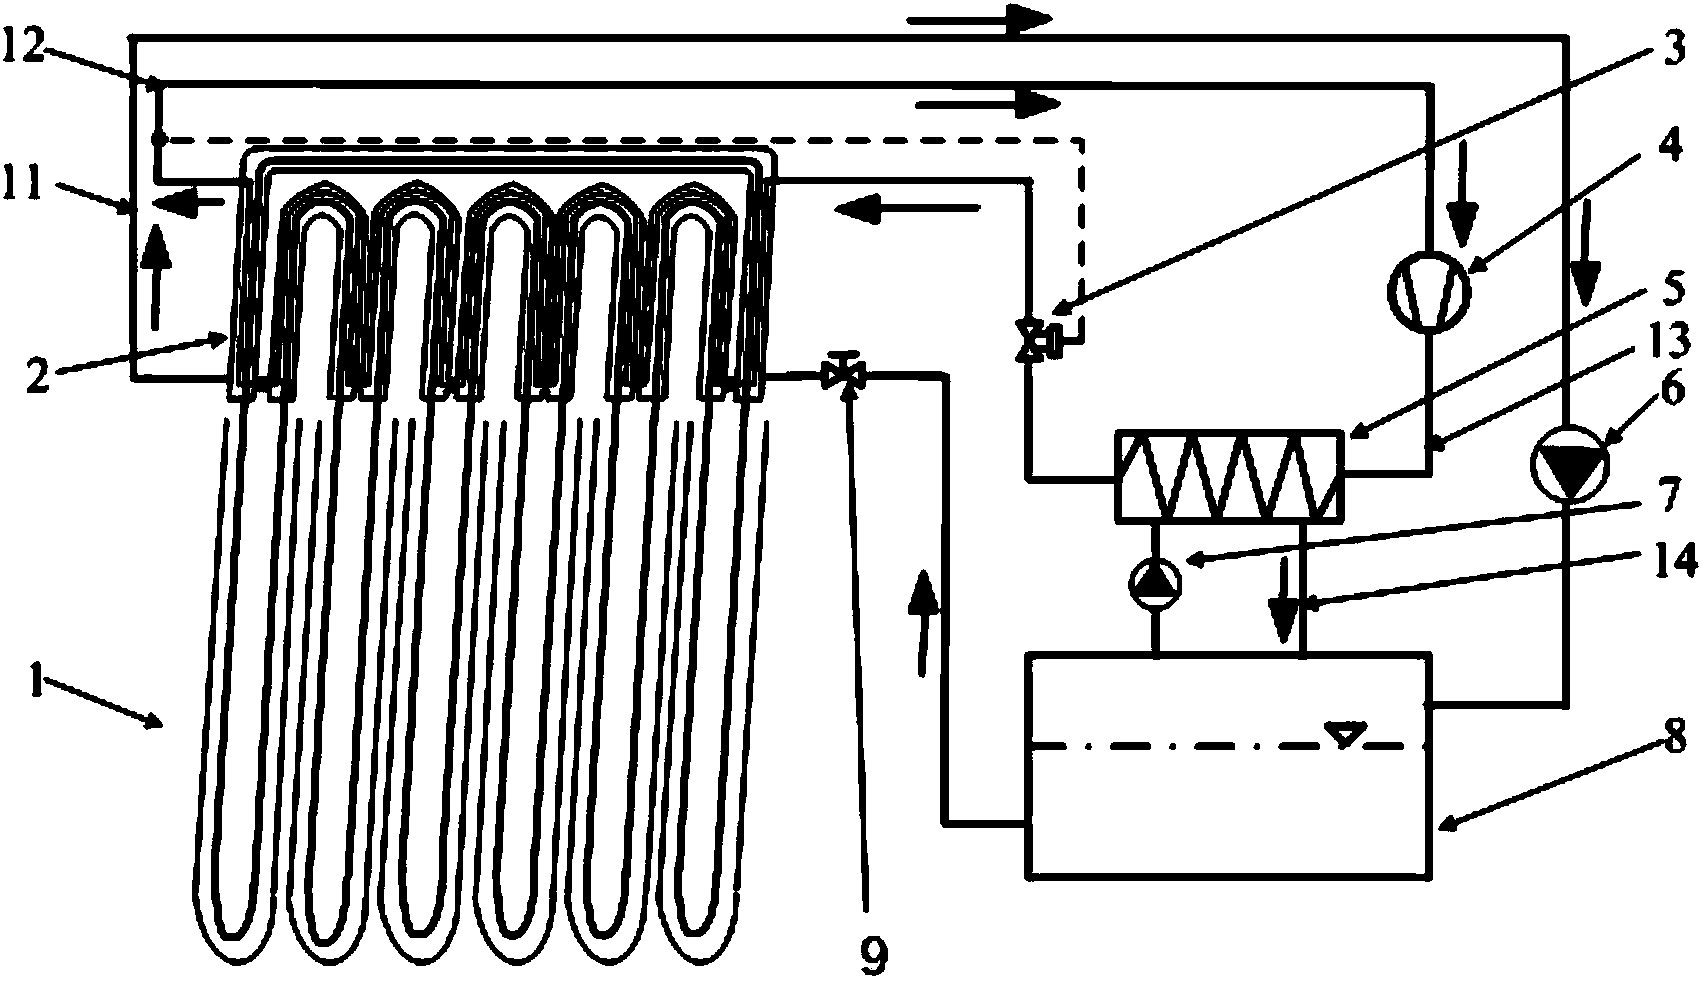 Heat supply method of efficient energy storage type solar heat pump operating around clock